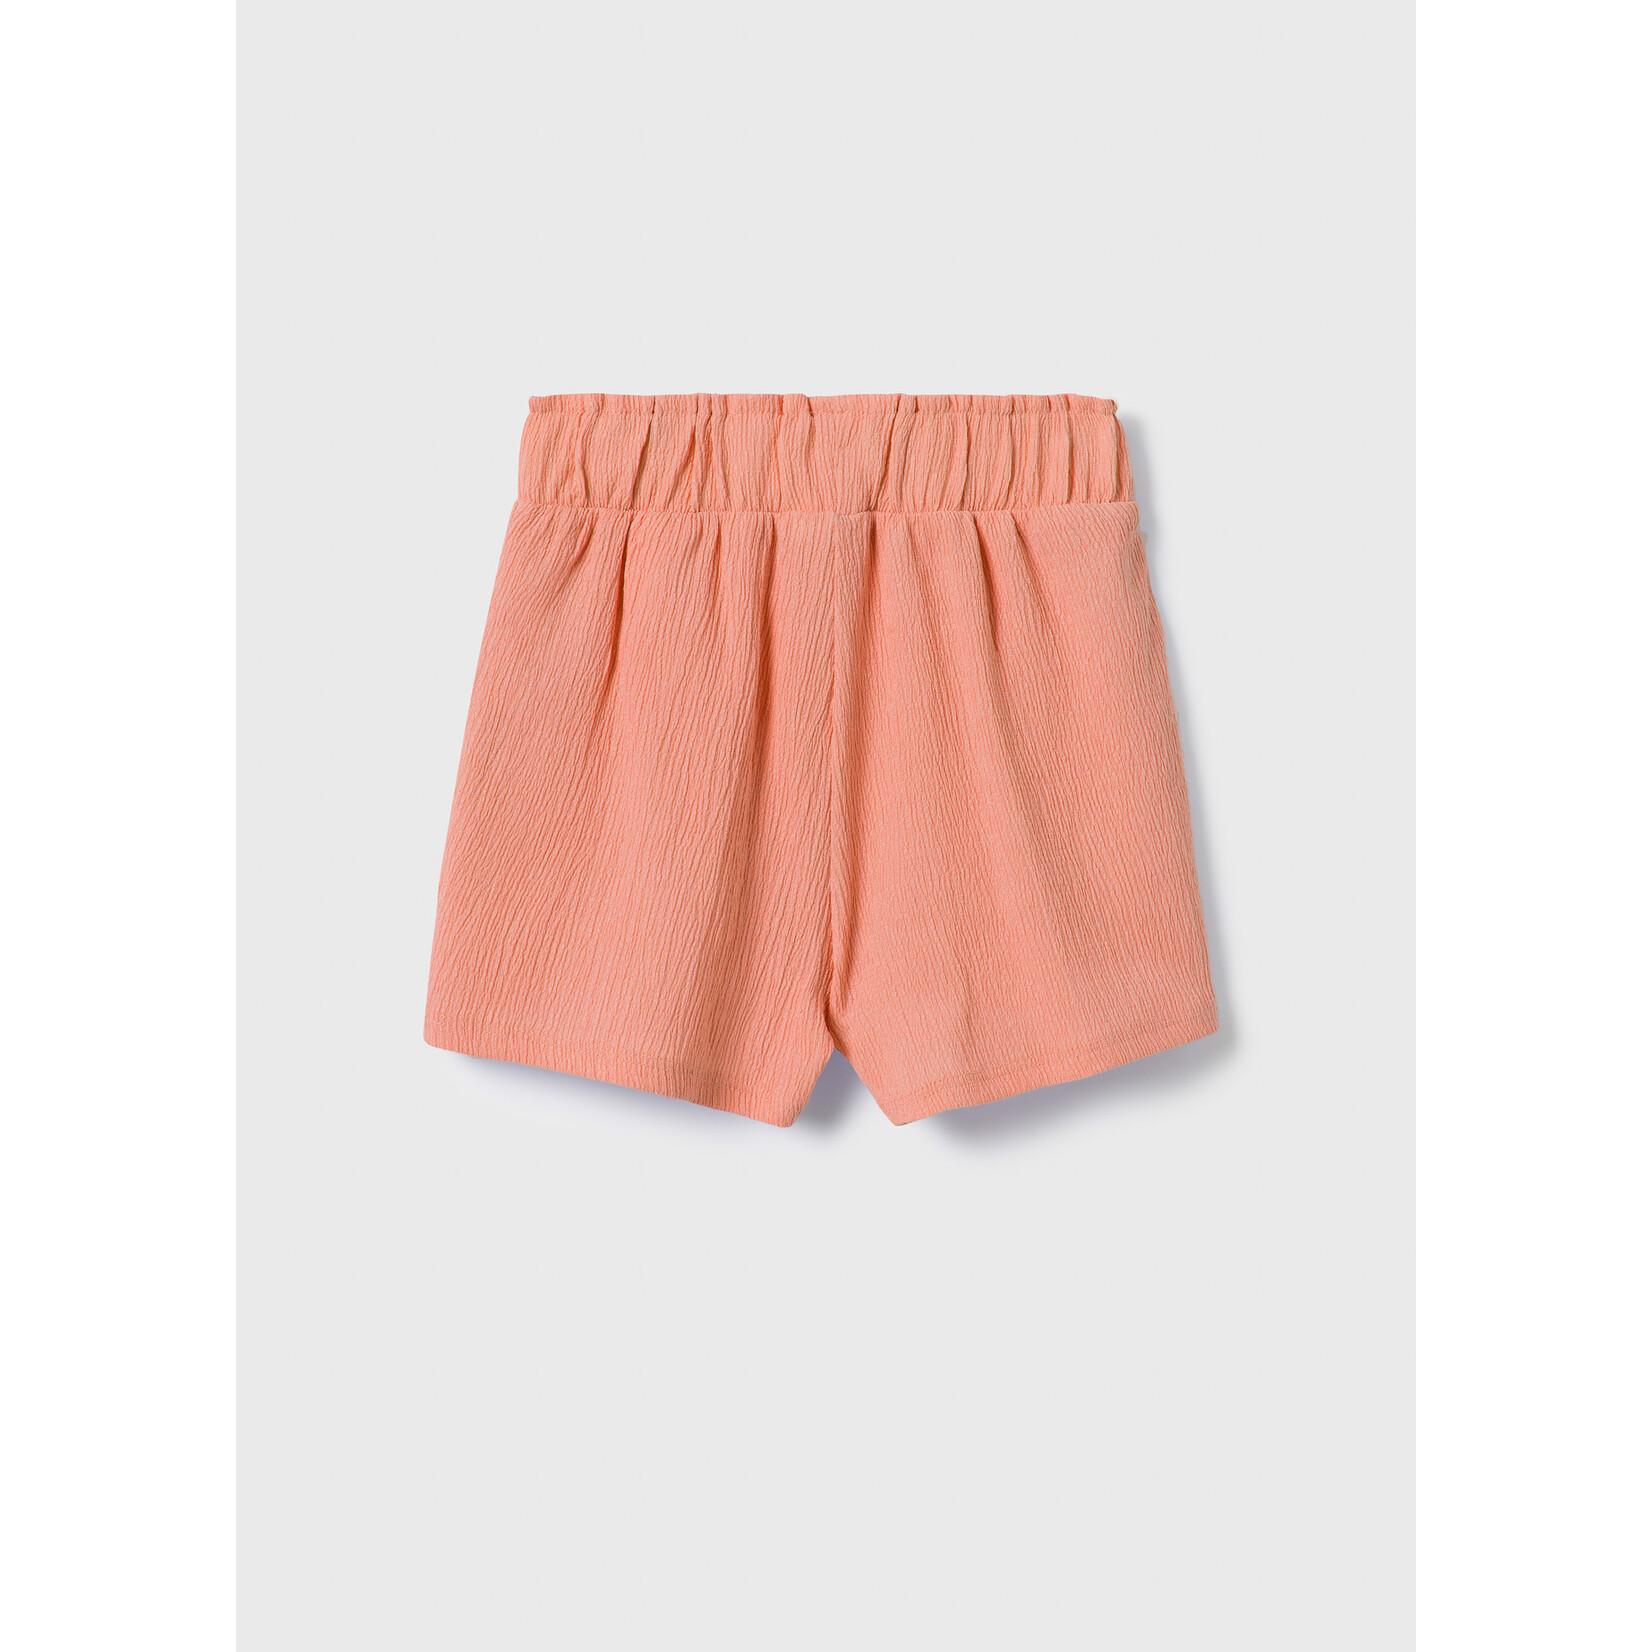 Mandarine & Co. MANDARINE & CO. - Orange pink French terry shorts